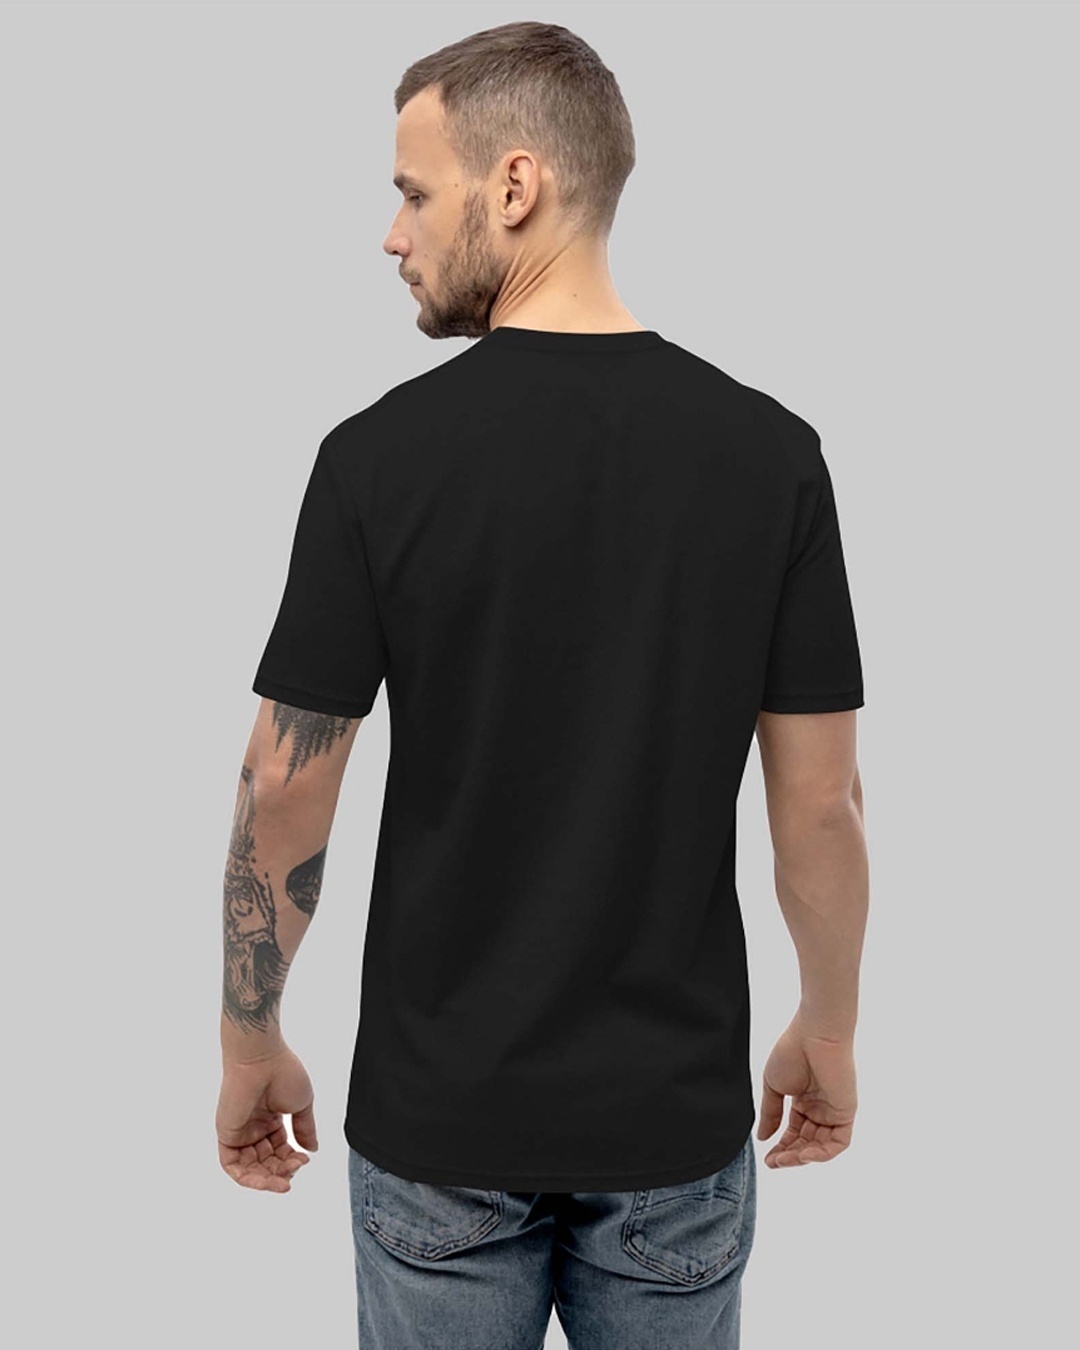 Shop Men's Black Twenty One Pilots Graphic Printed T-shirt-Design